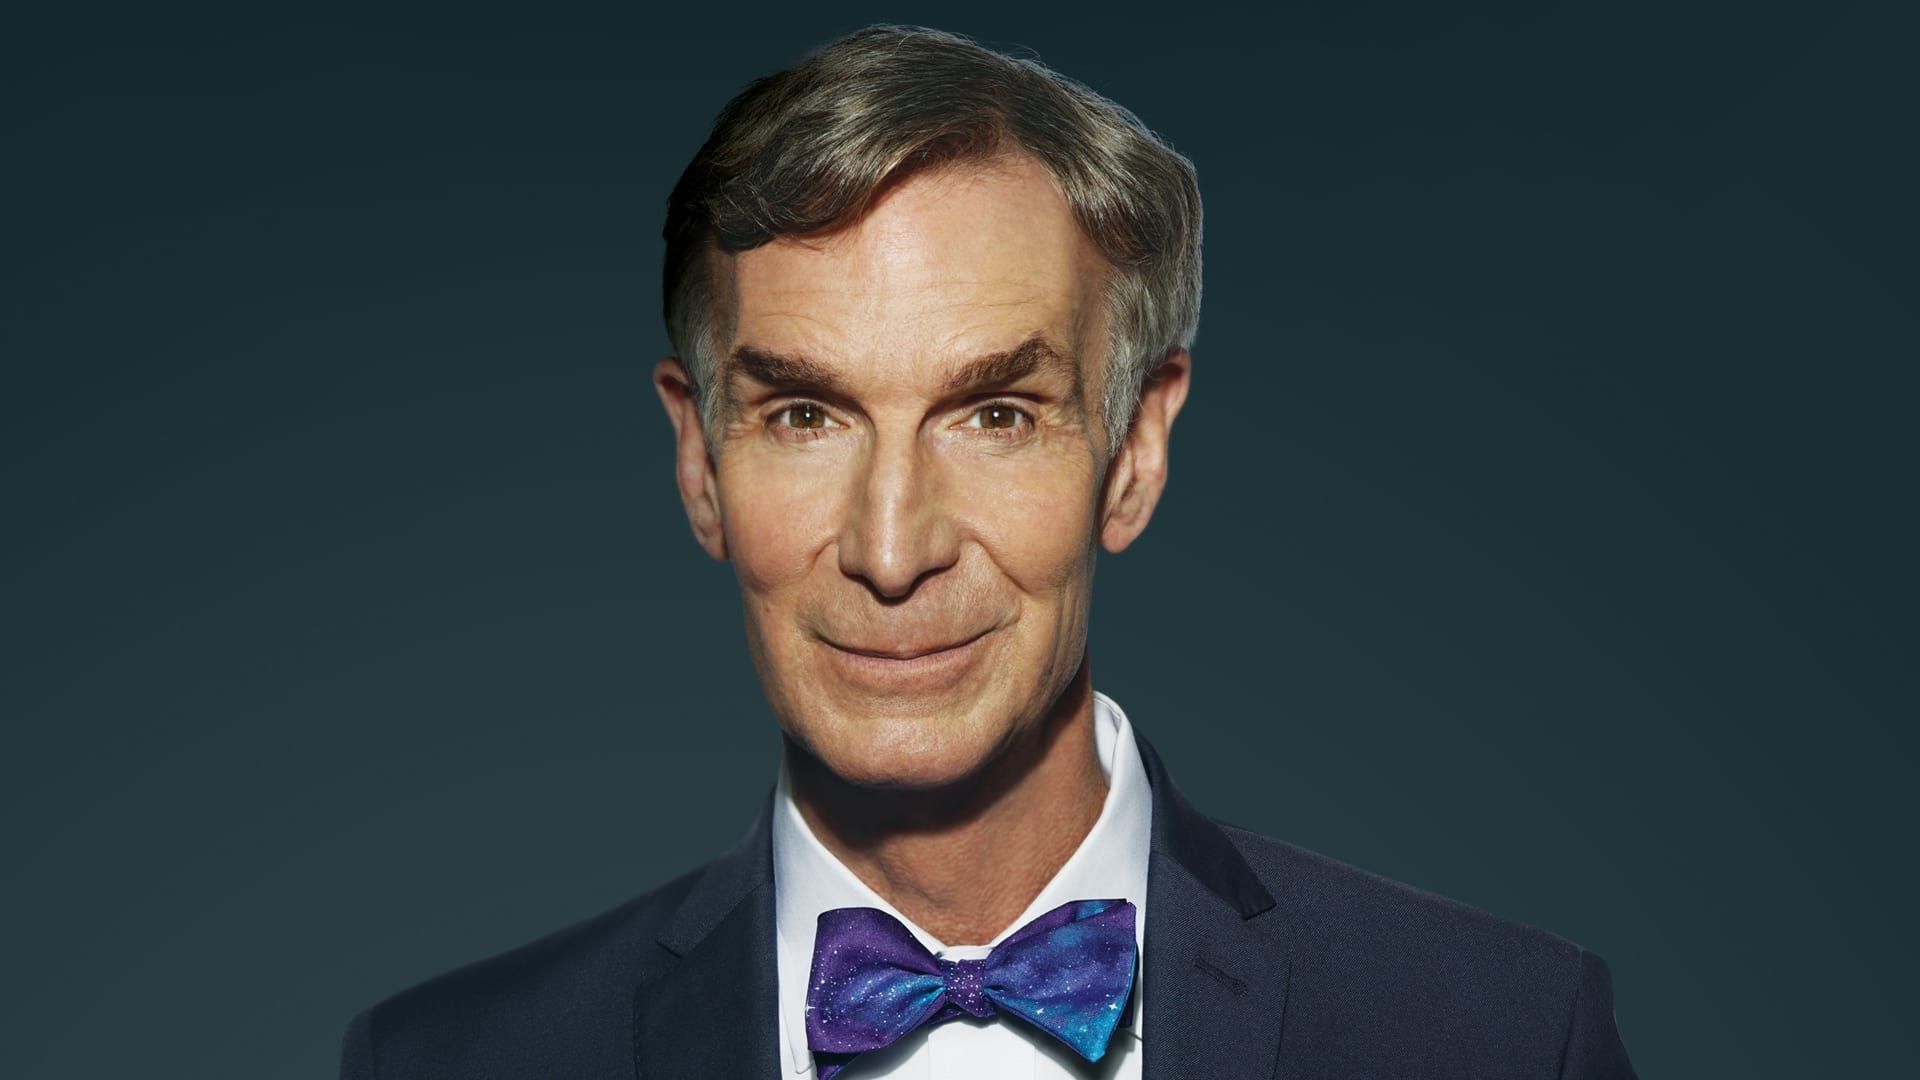 Bill Nye: Science Guy background